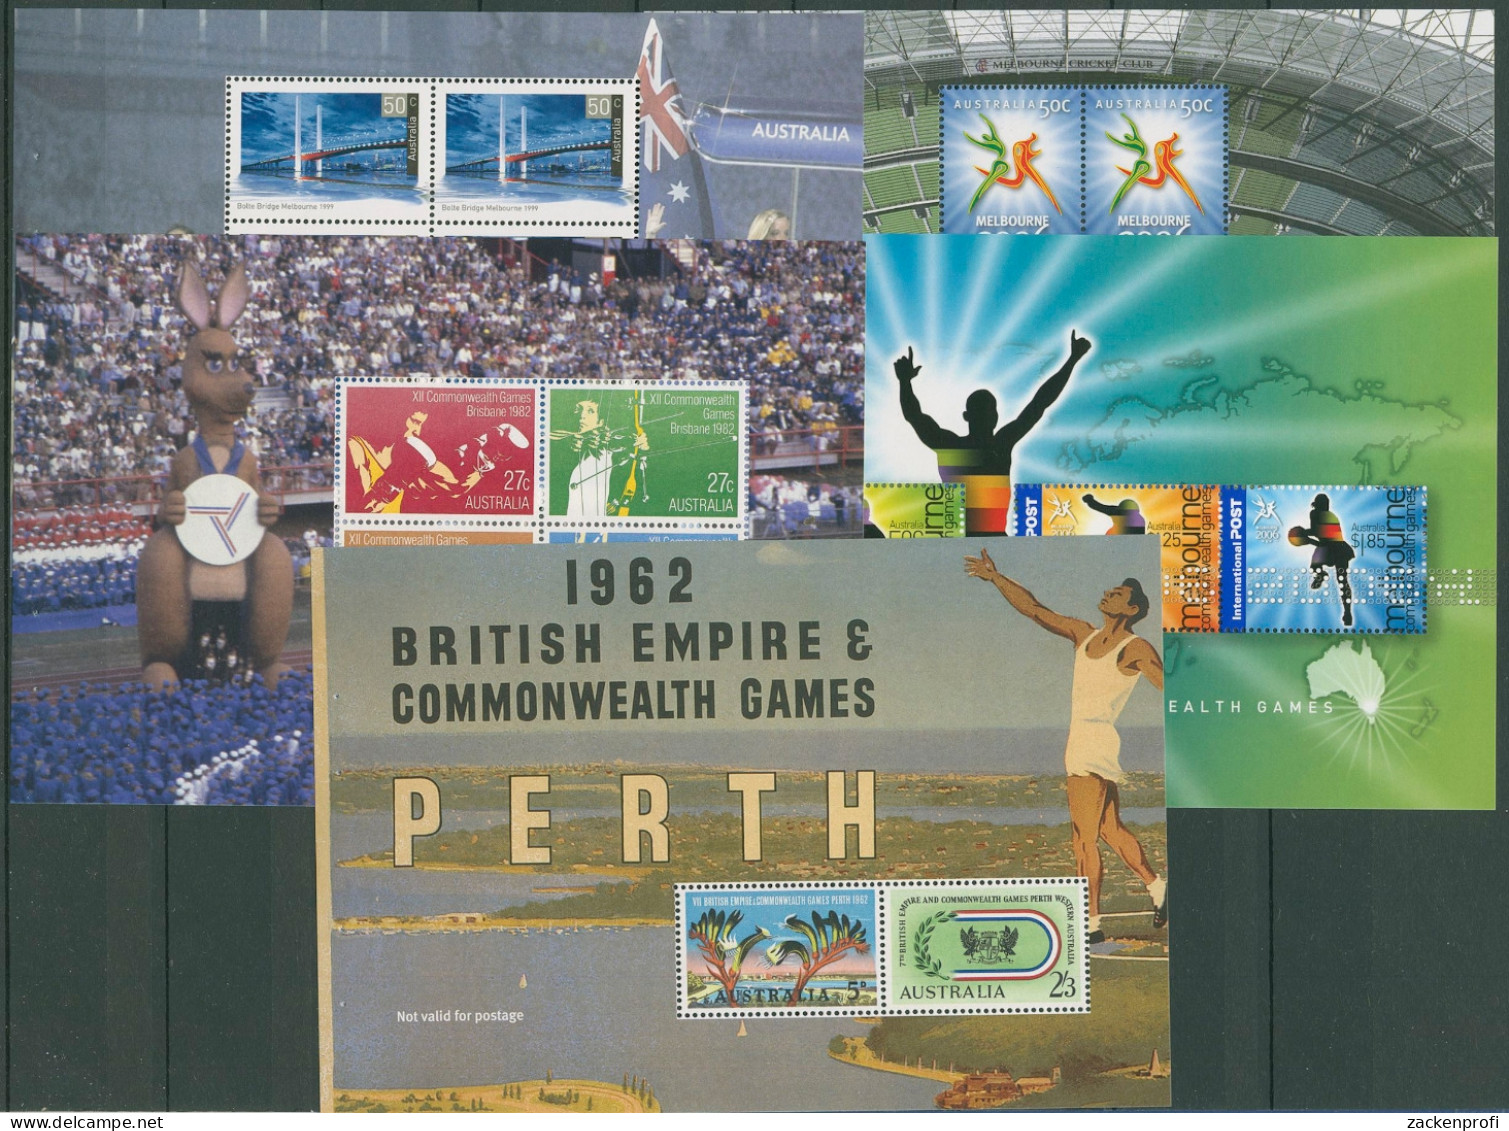 Australien 2006 Commonwealth Games MH 226 Postfrisch (C29644) - Booklets